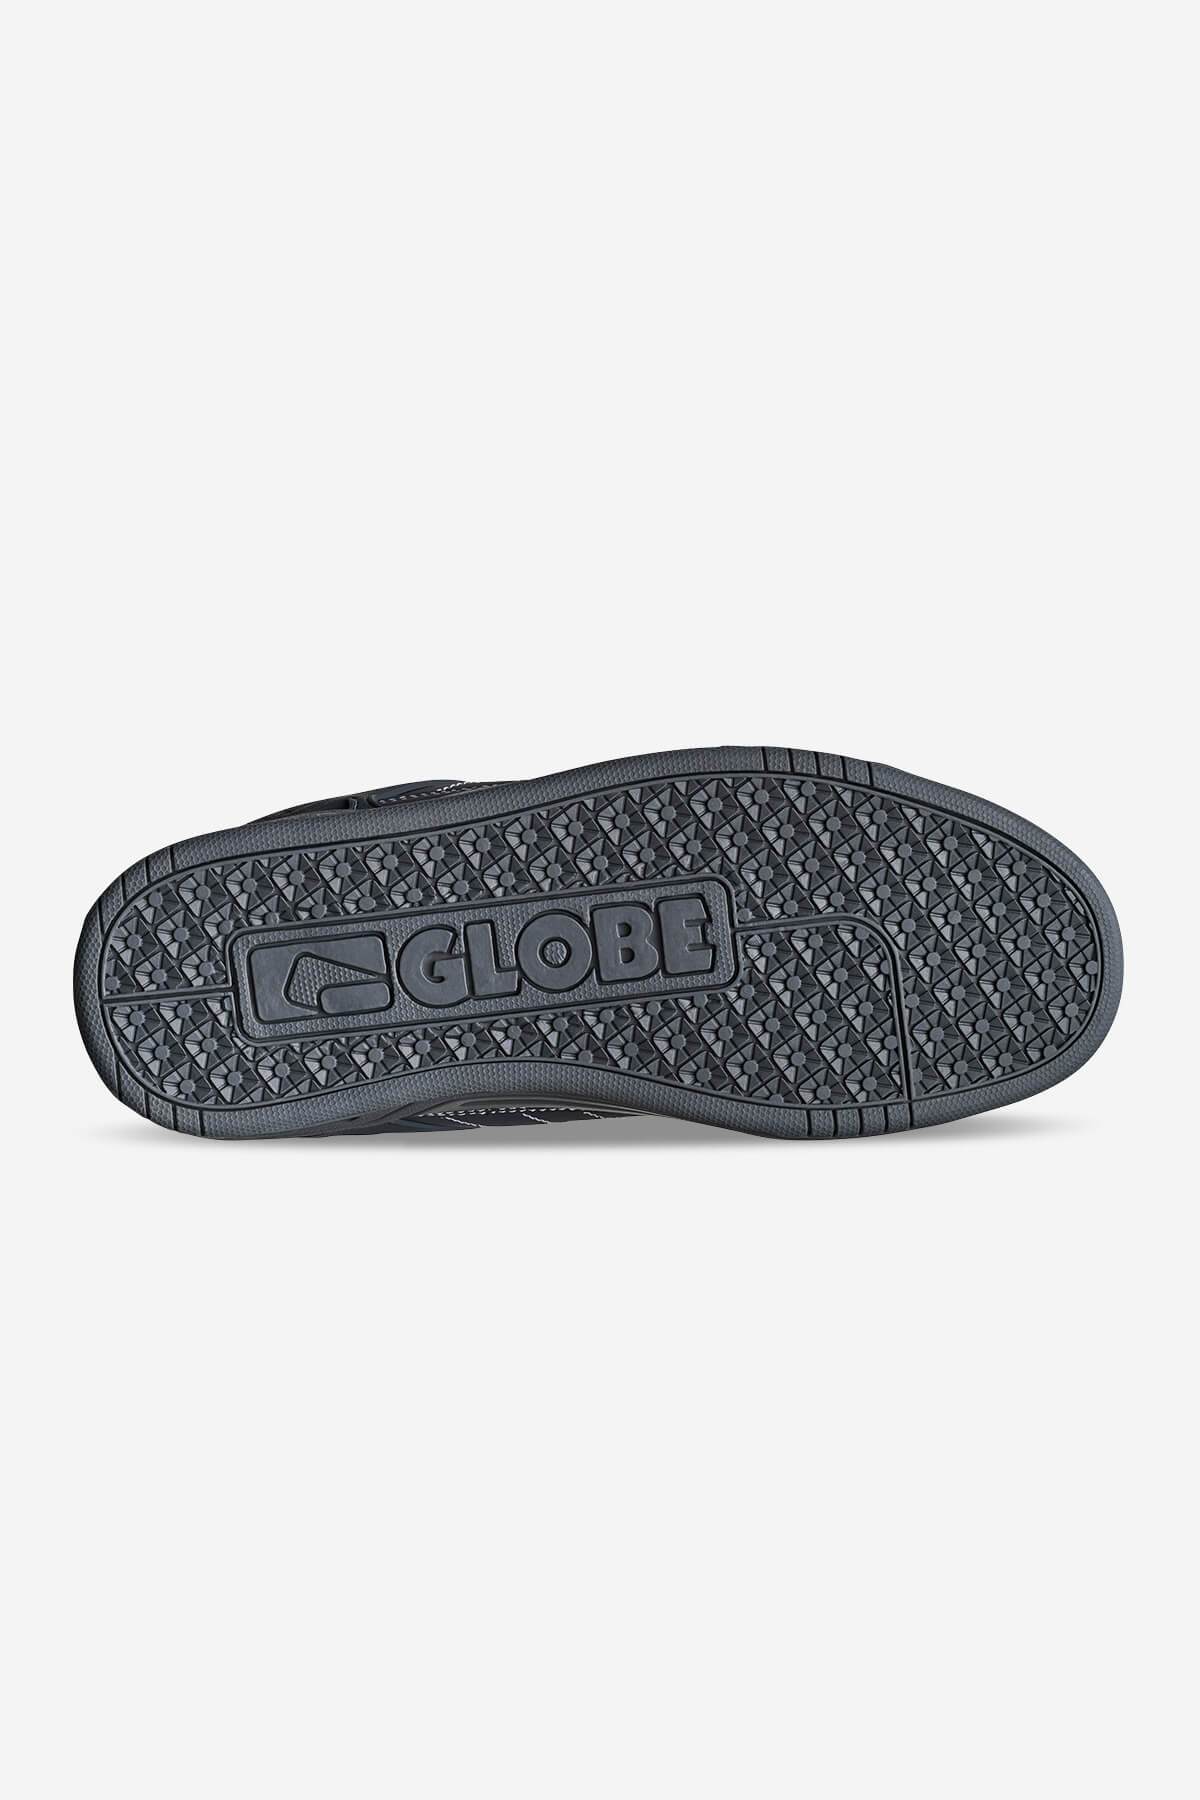 Globe - Tilt - Ebony/Stitch - skateboard Chaussures